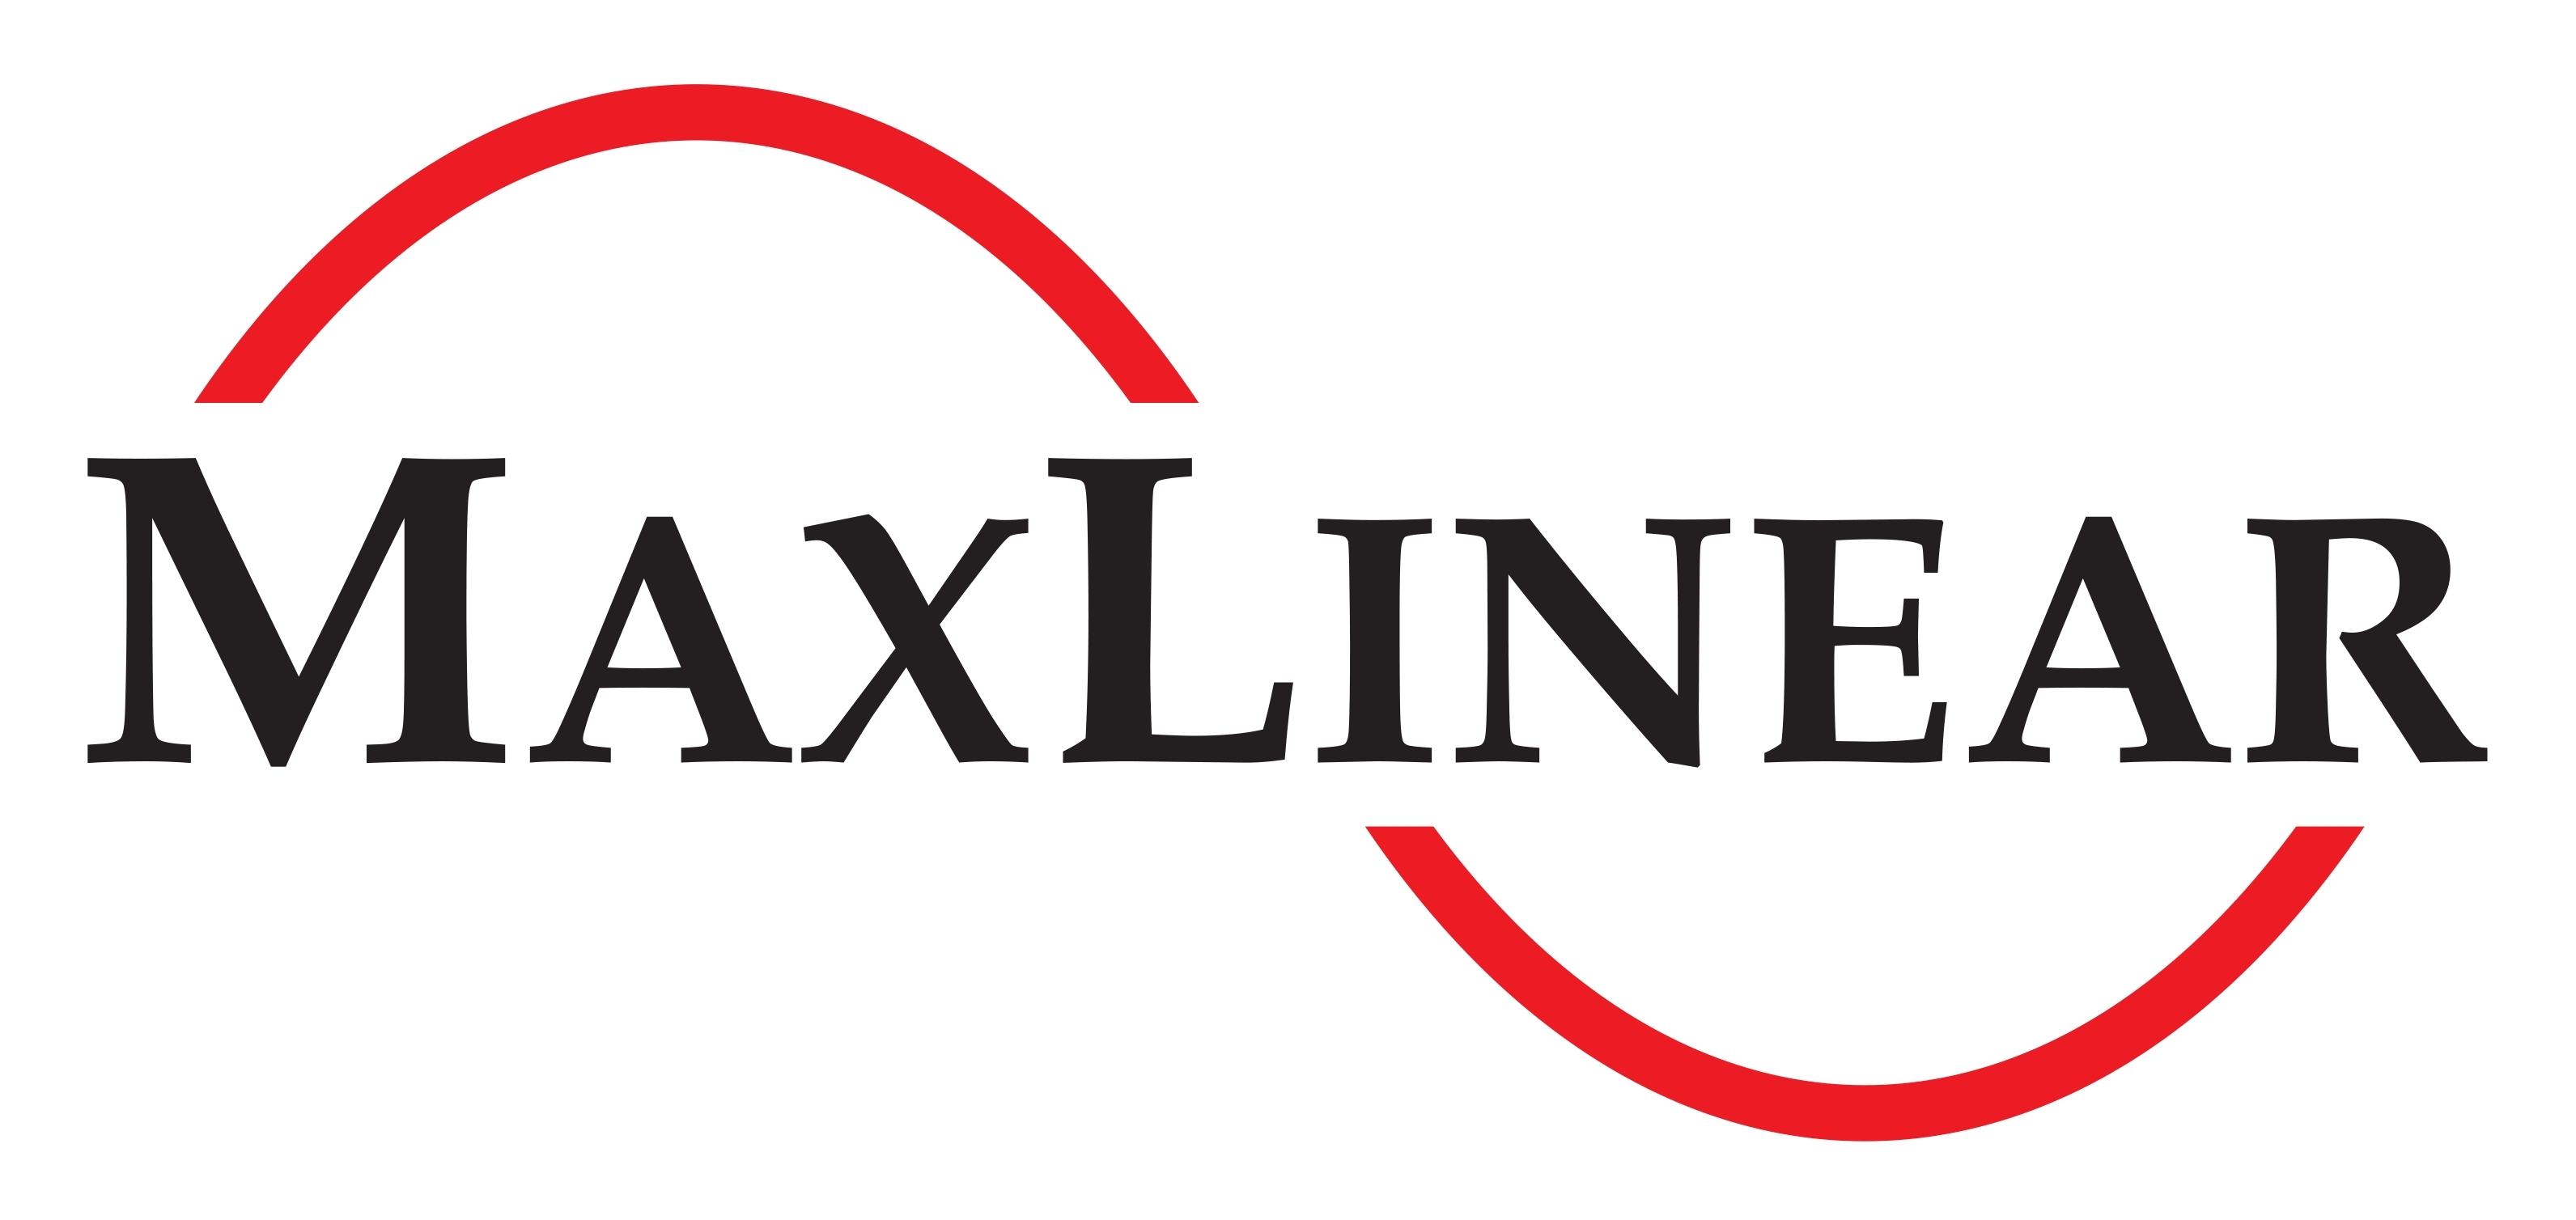 https://mms.businesswire.com/media/20200505005152/en/765014/5/MaxLinear_Logo.jpg 